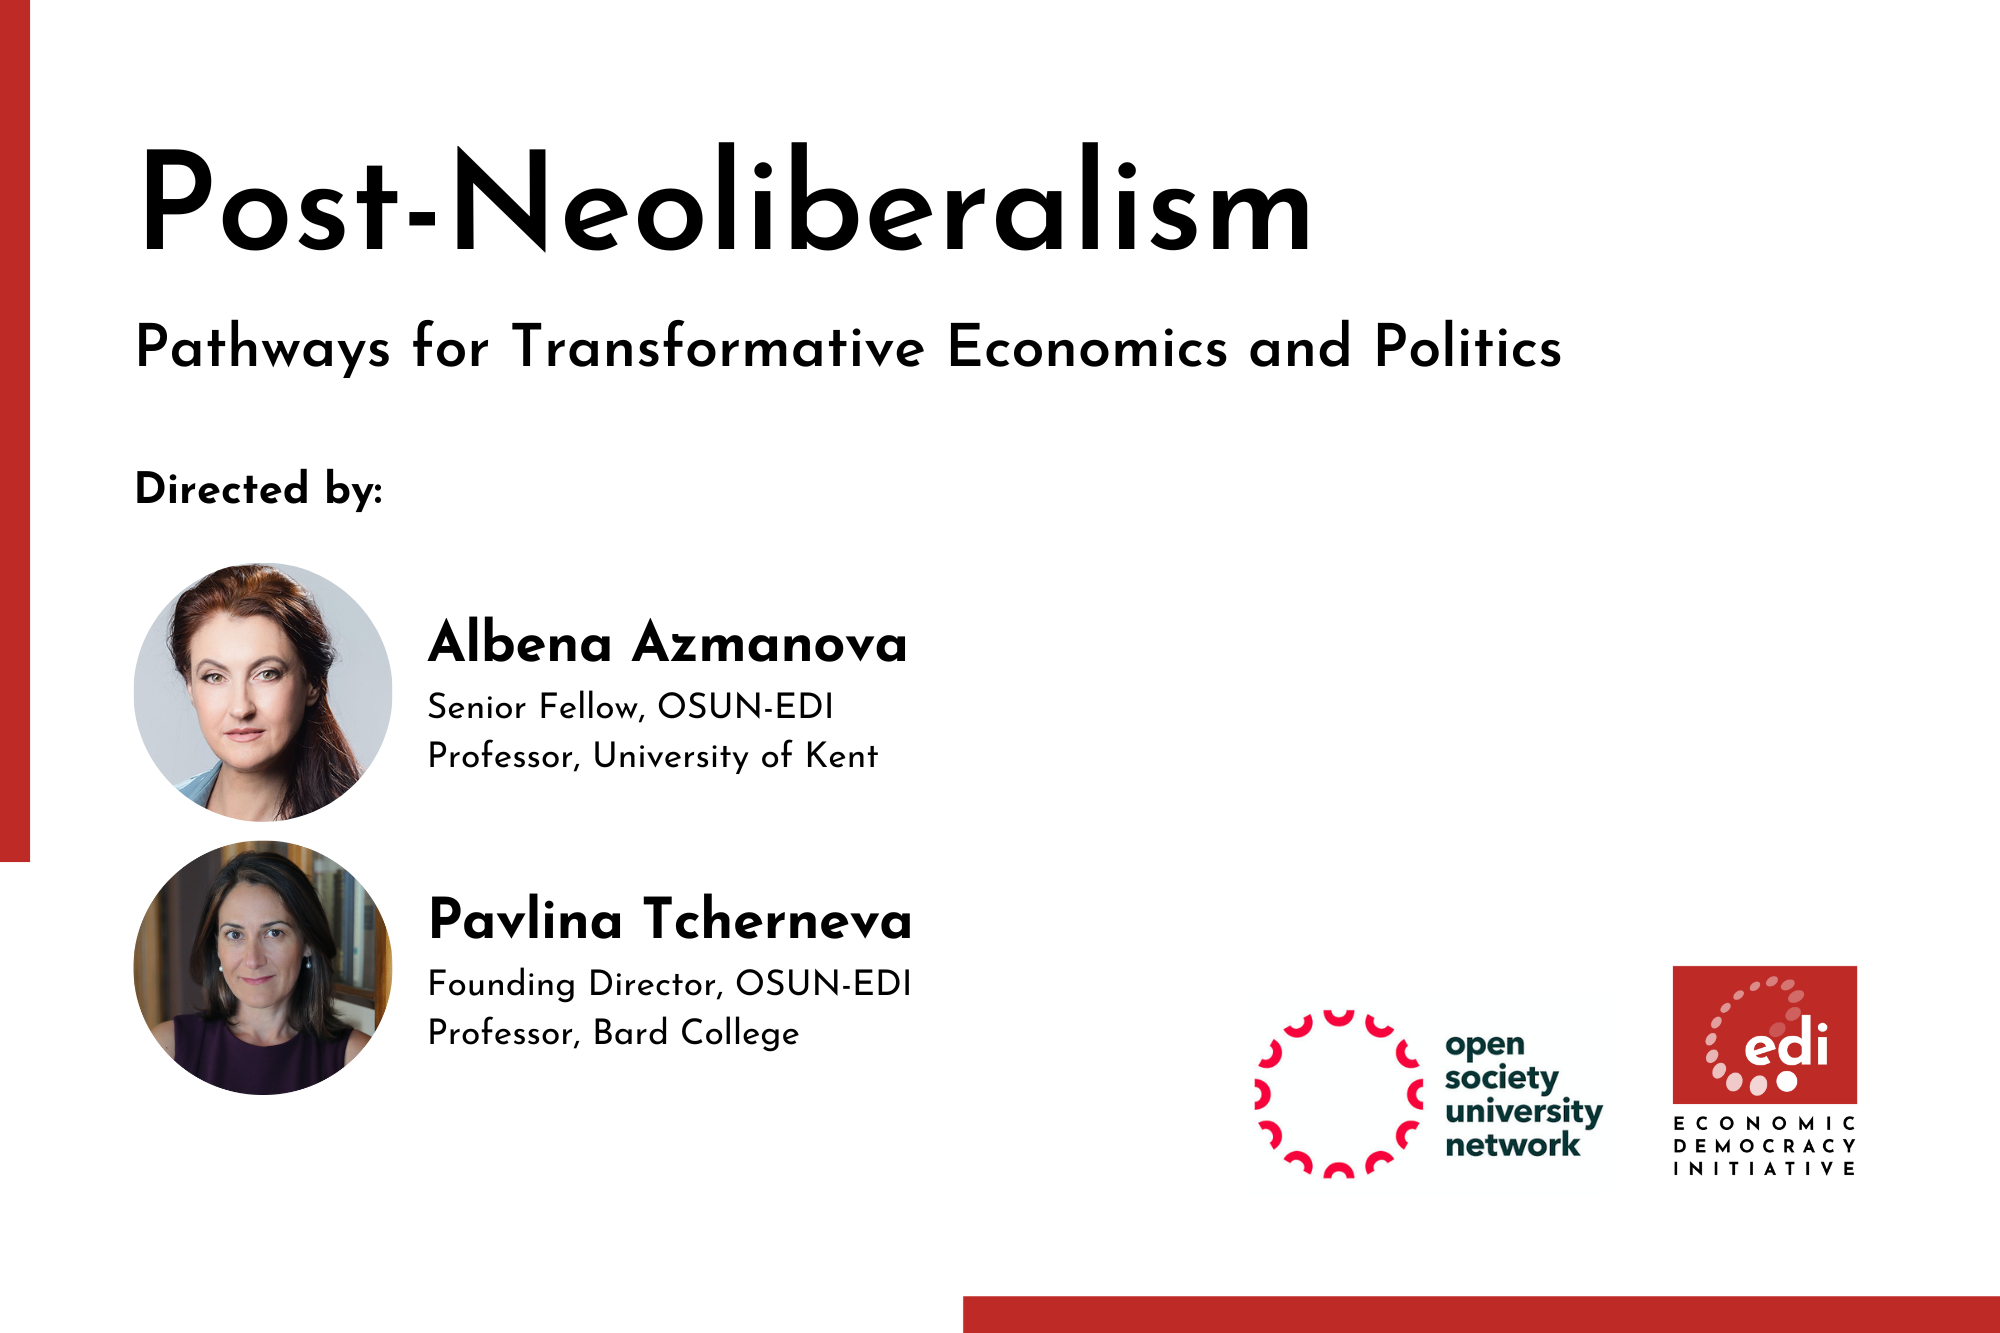 Post-Neoliberalism Symposium